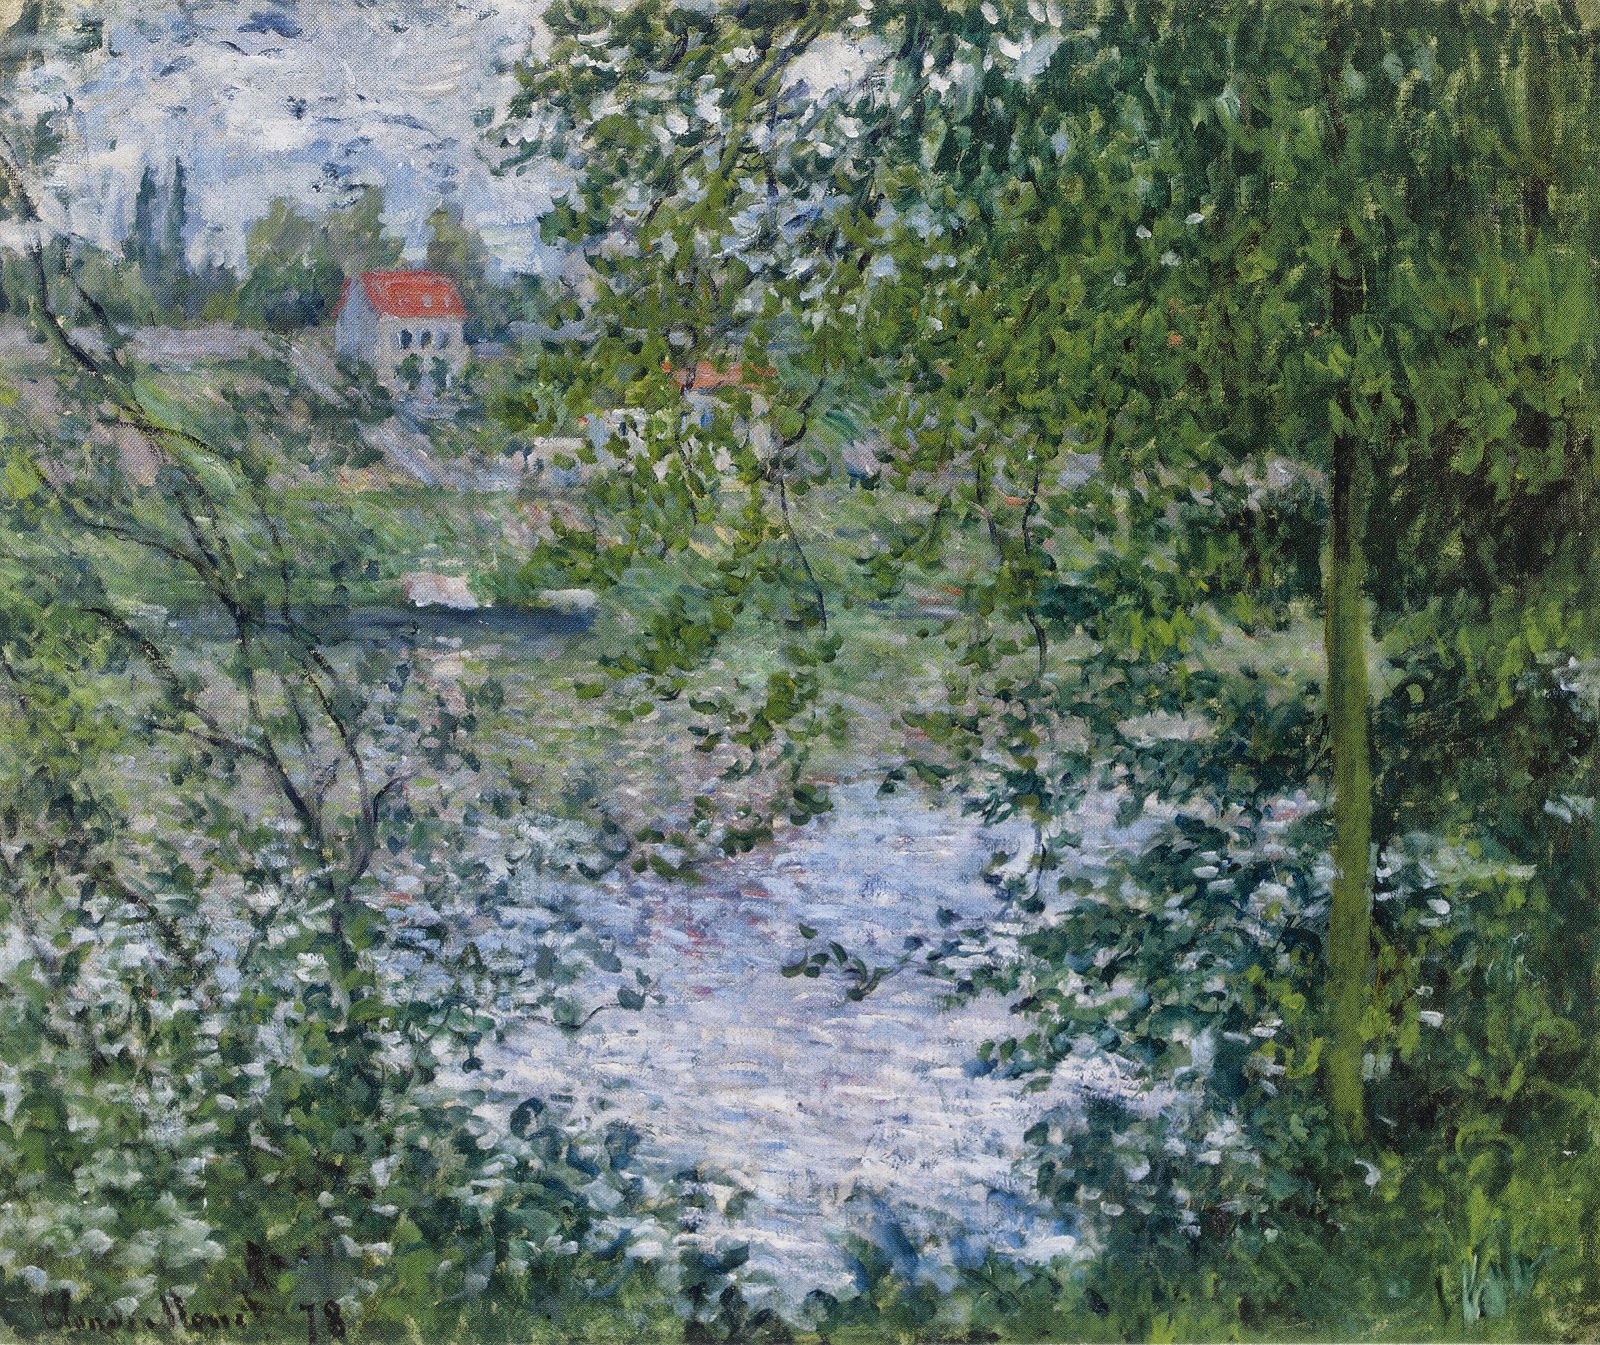 Claude+Monet-1840-1926 (518).jpg